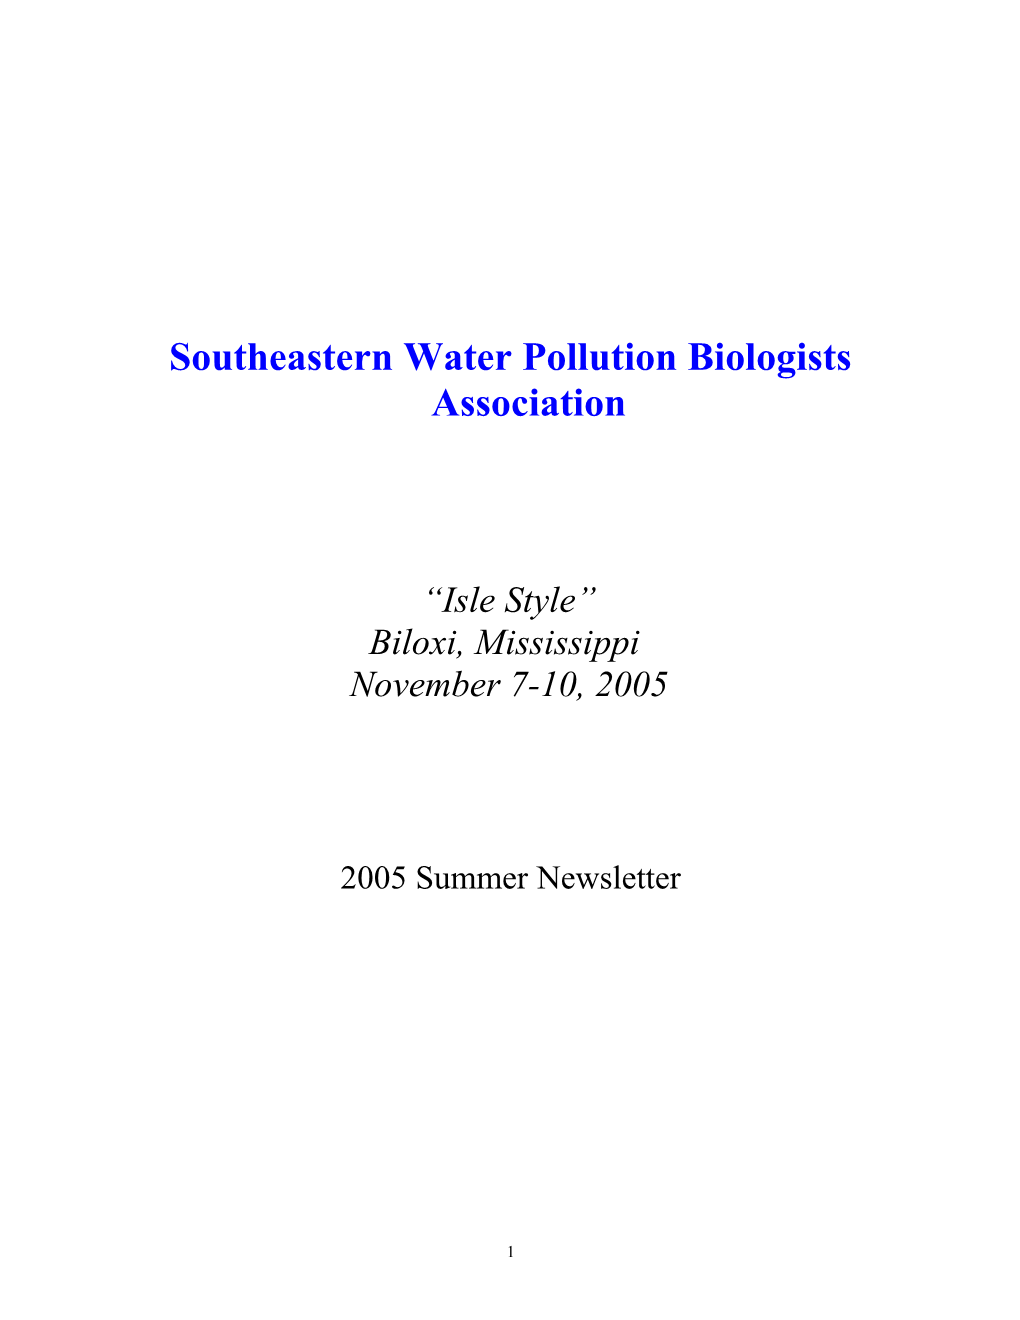 Southeastern Water Pollution Biologists Association